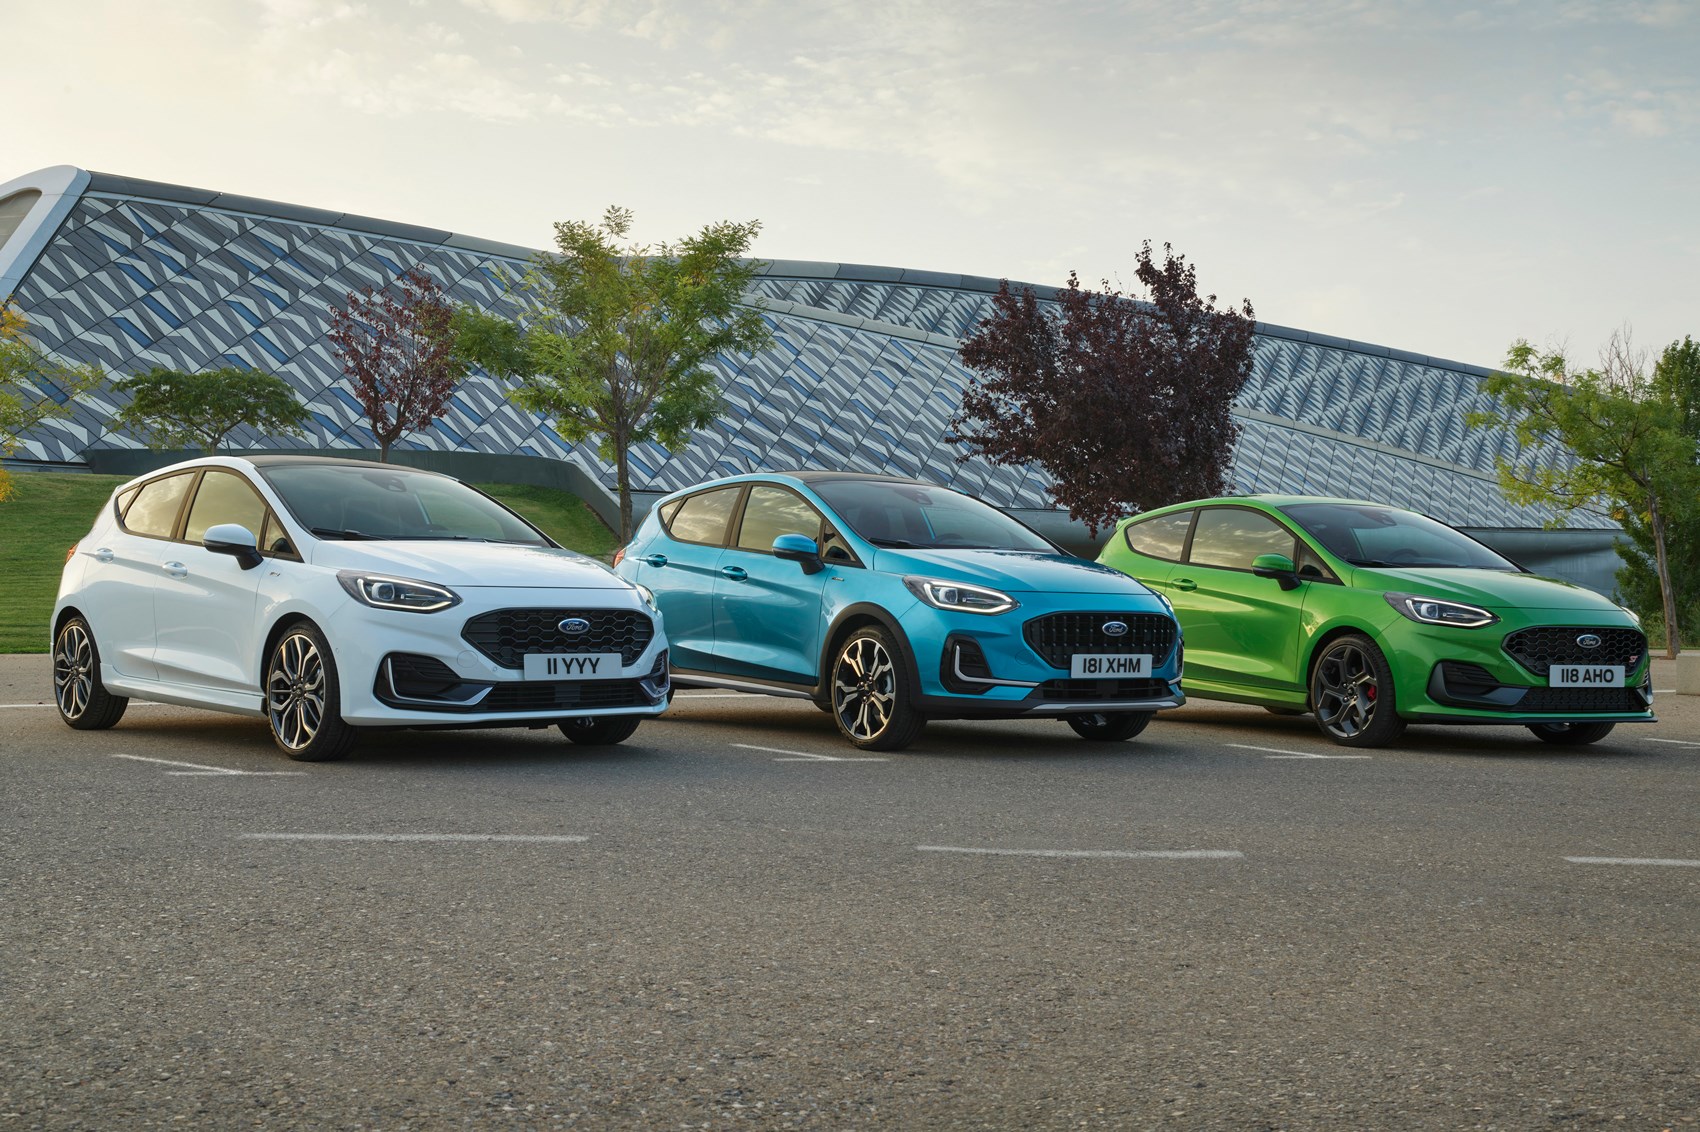 Which Ford Fiesta model is best?